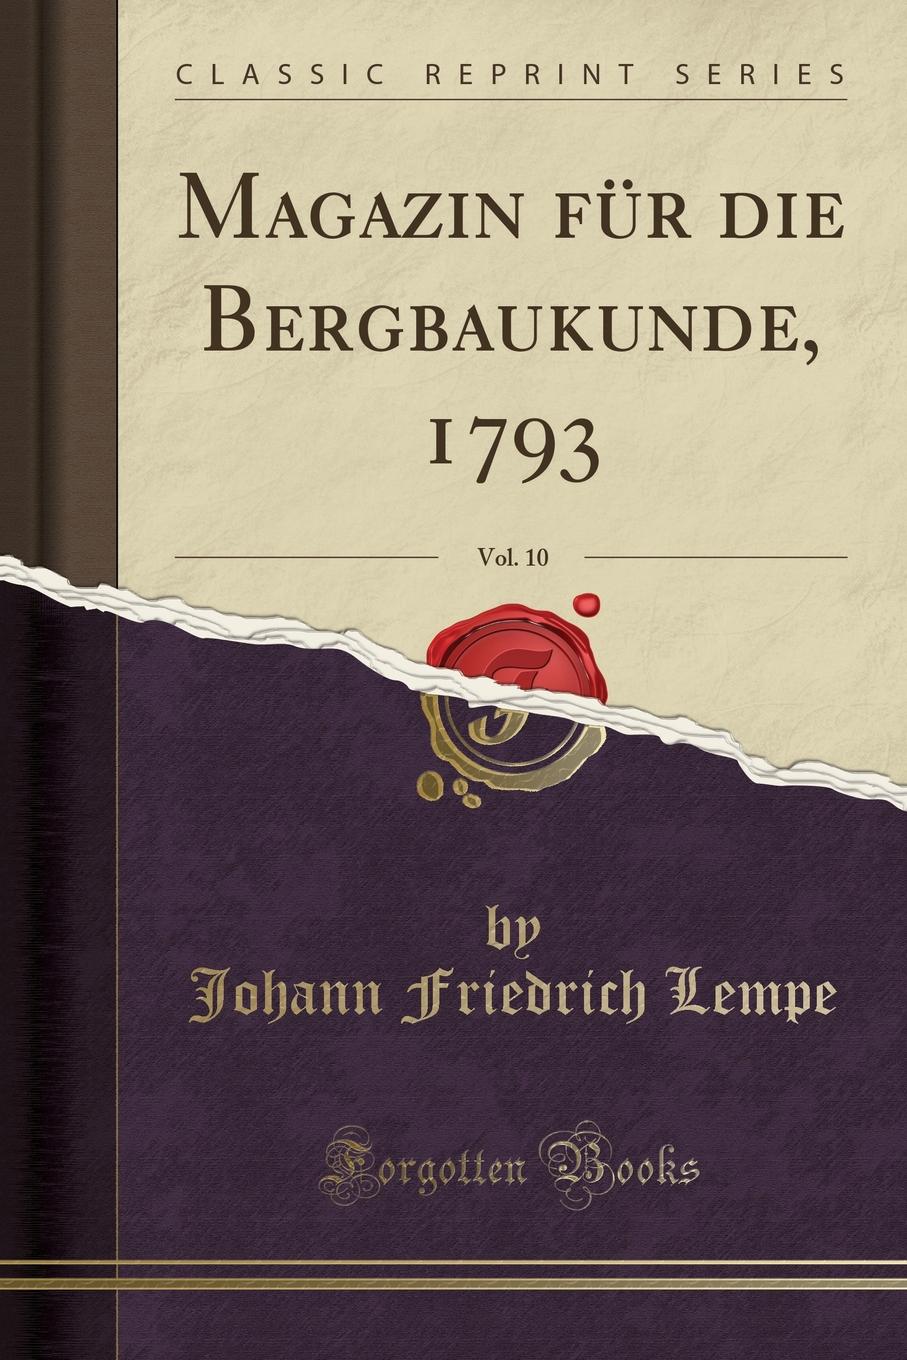 Johann Friedrich Lempe Magazin fur die Bergbaukunde, 1793, Vol. 10 (Classic Reprint)